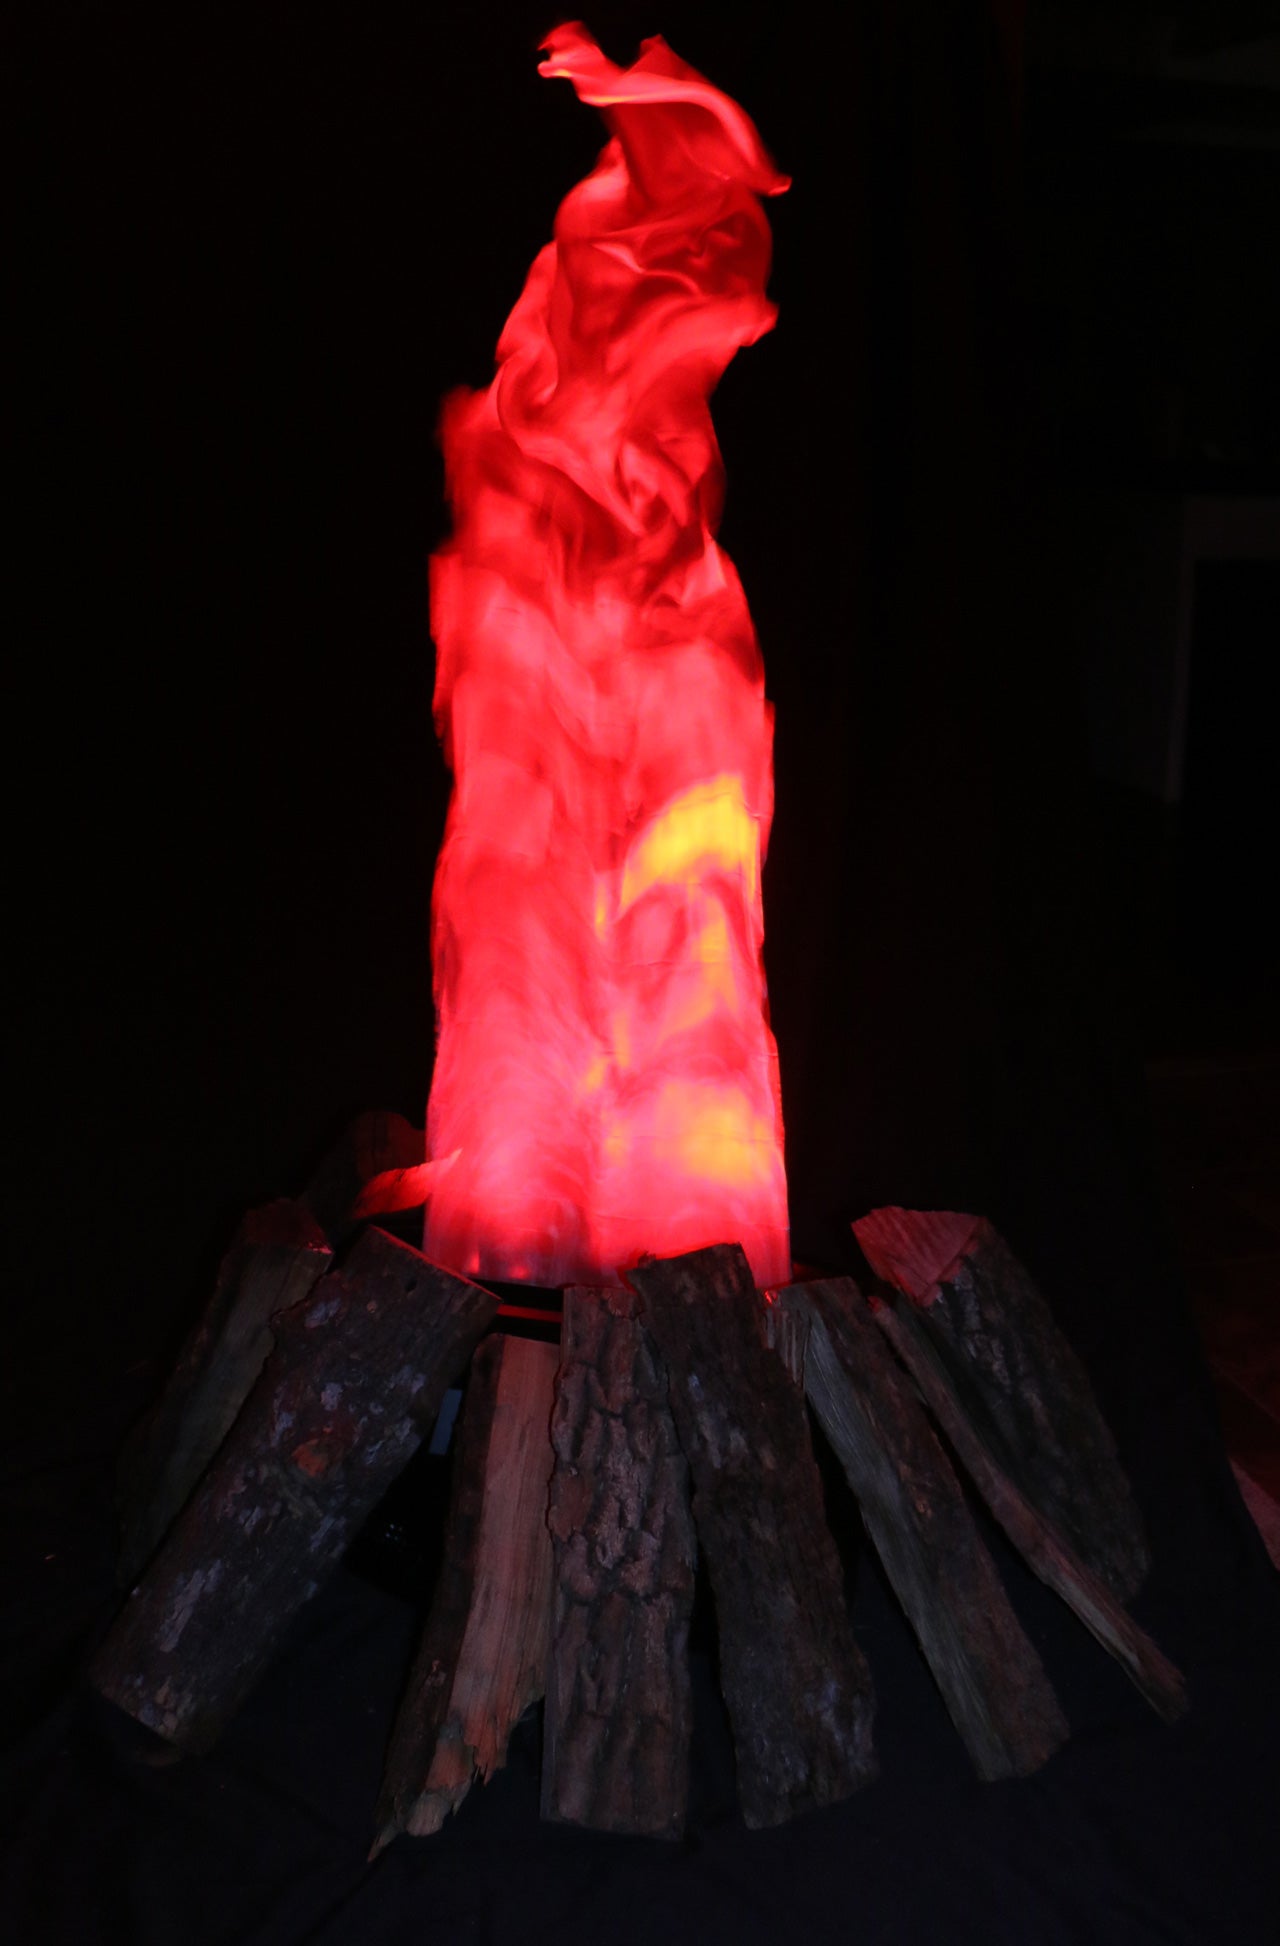 Bonfire Fake Flame Unit (Large)